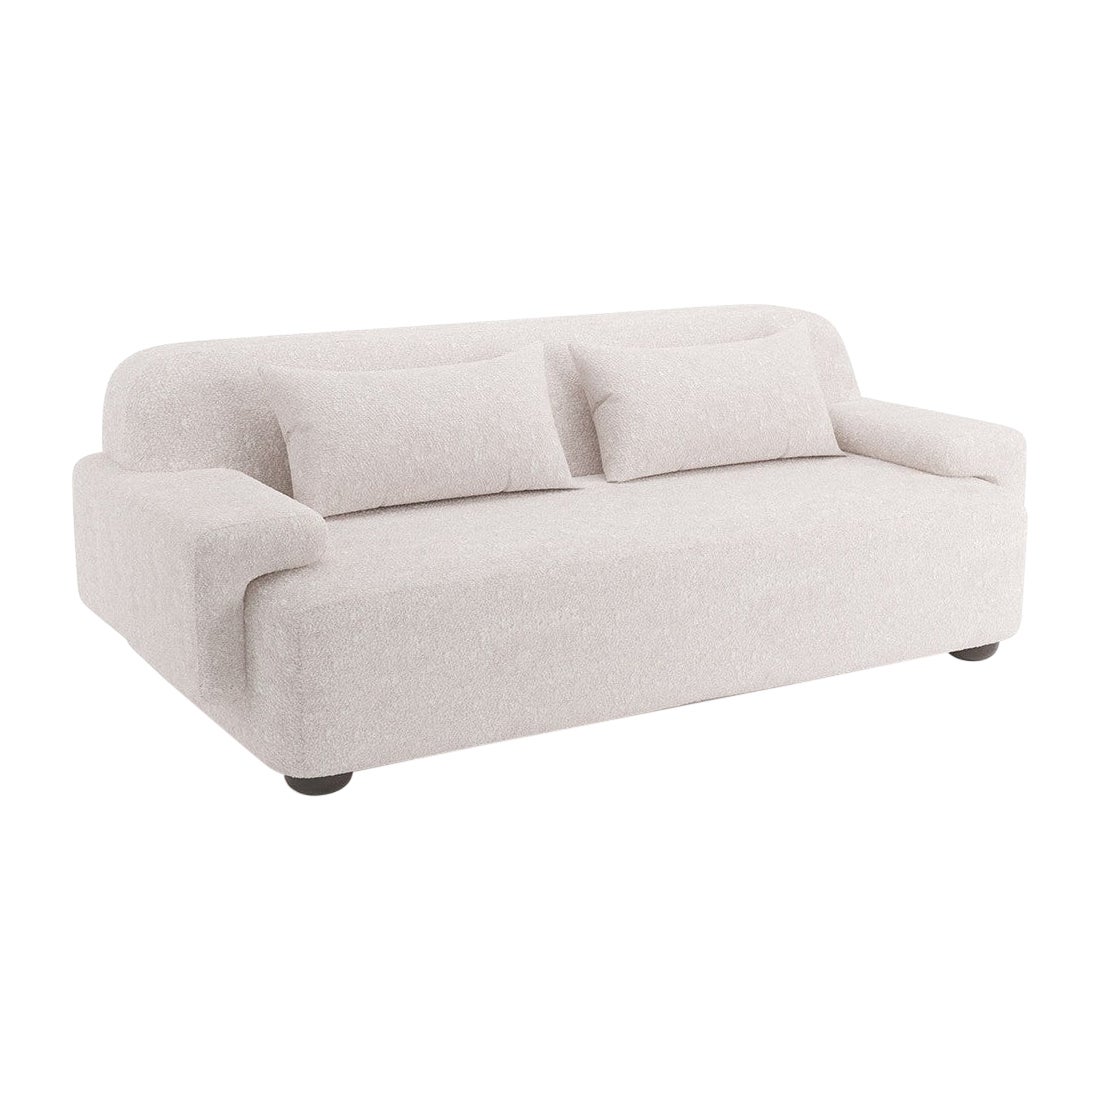 Popus Editions Lena 3 Seater Sofa in Duna Venice Chenille Velvet Upholstery For Sale